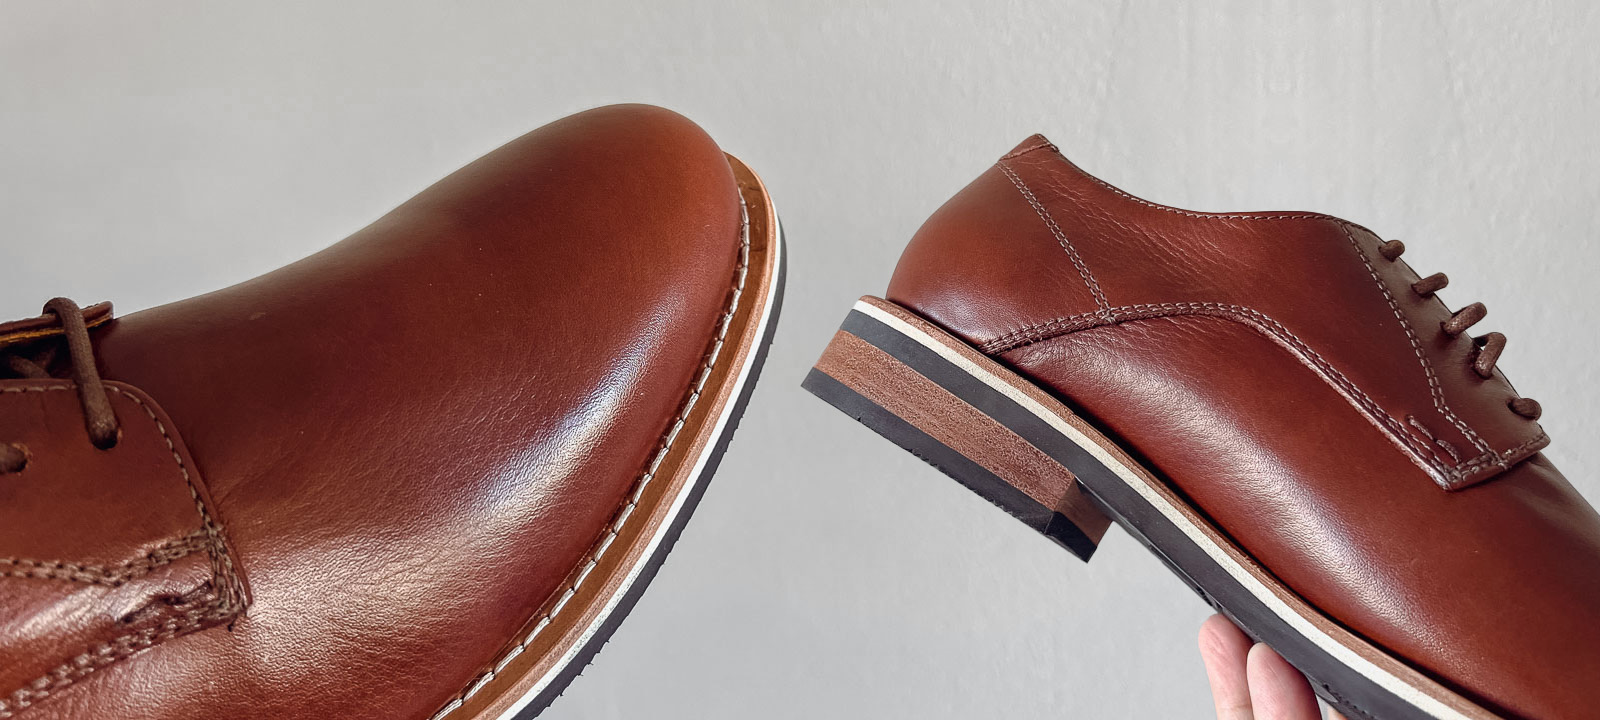 closeup of heel and toe of brown HELM boots Evans derbies